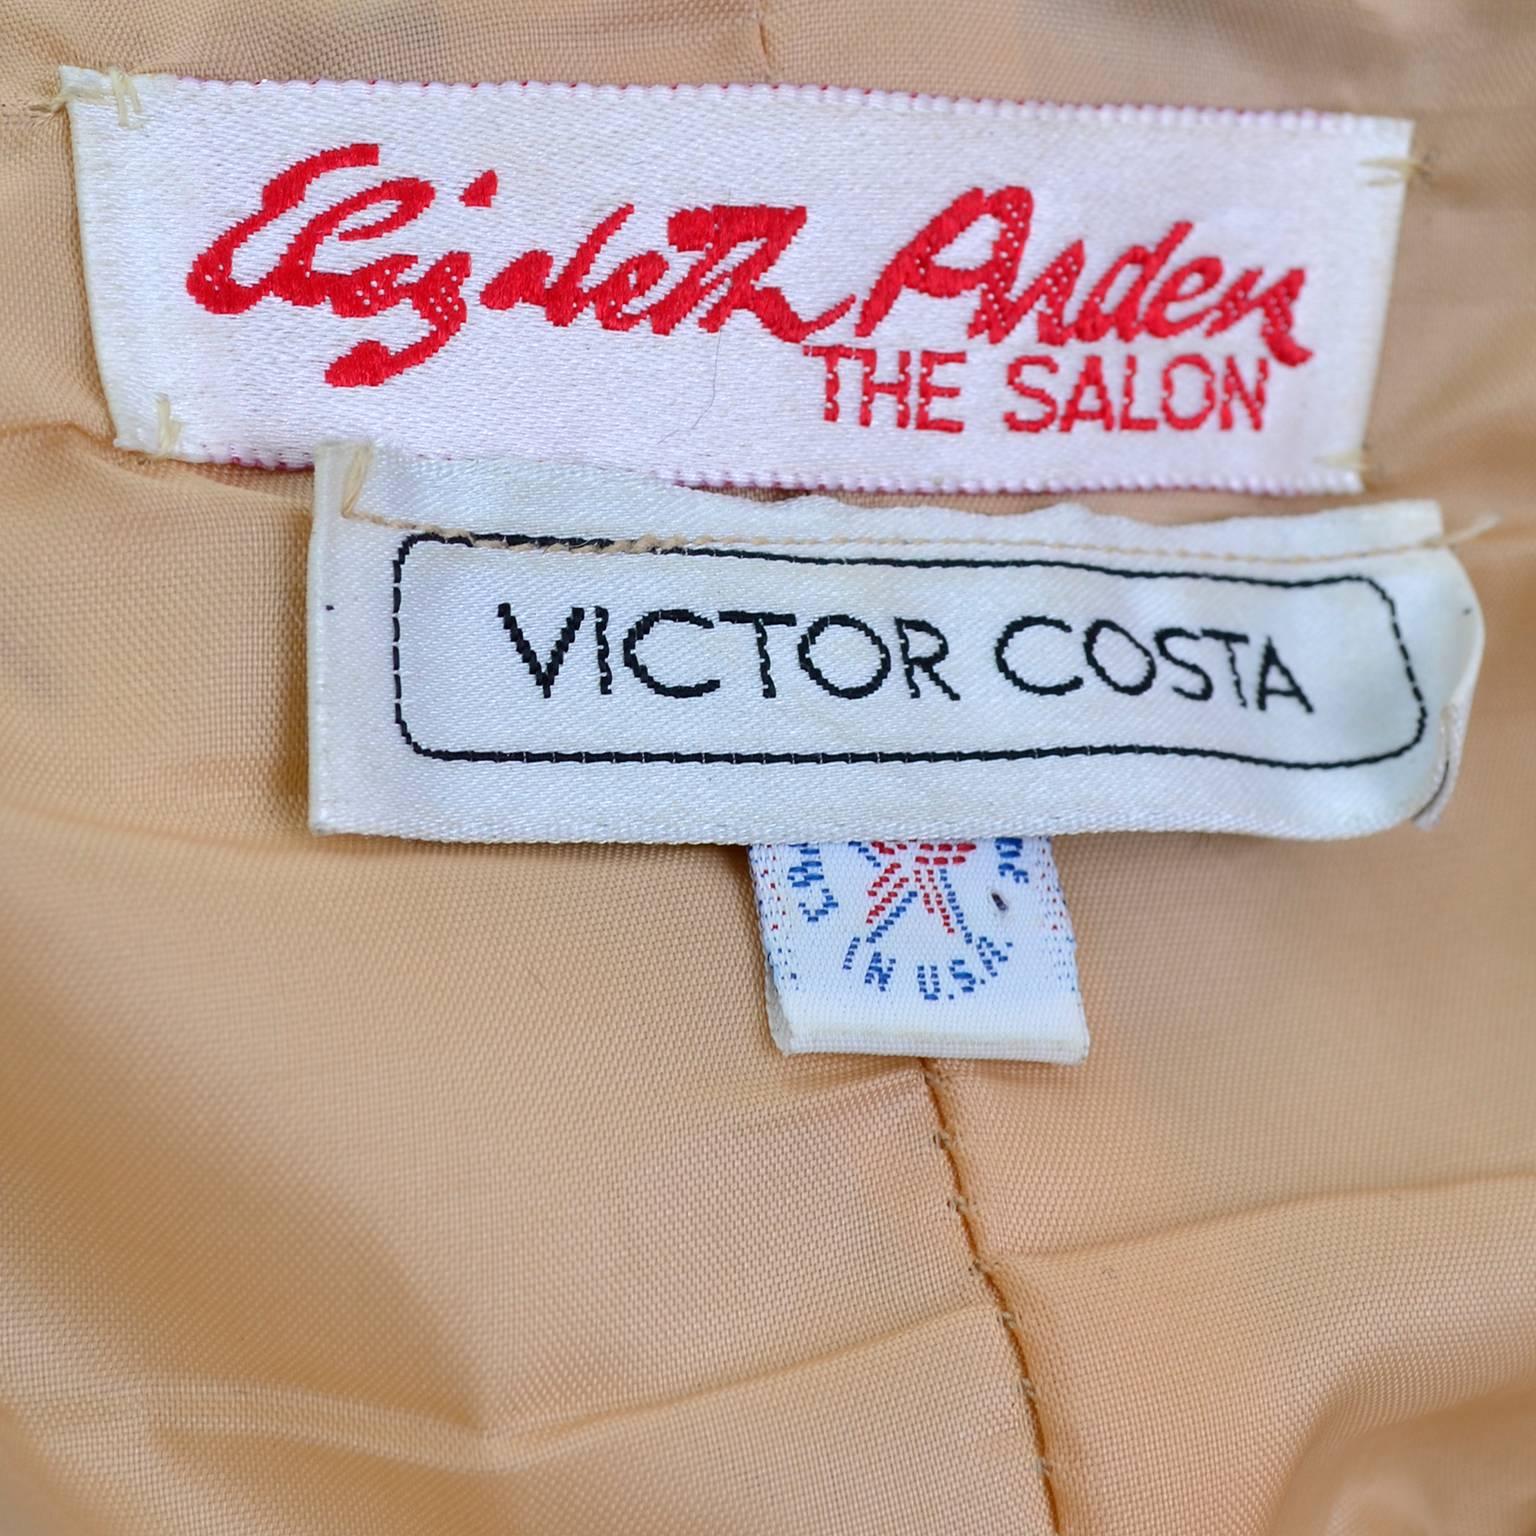 Victor Costa Elizabeth Arden Black Sculpted Avant Garde Vintage Dress 2